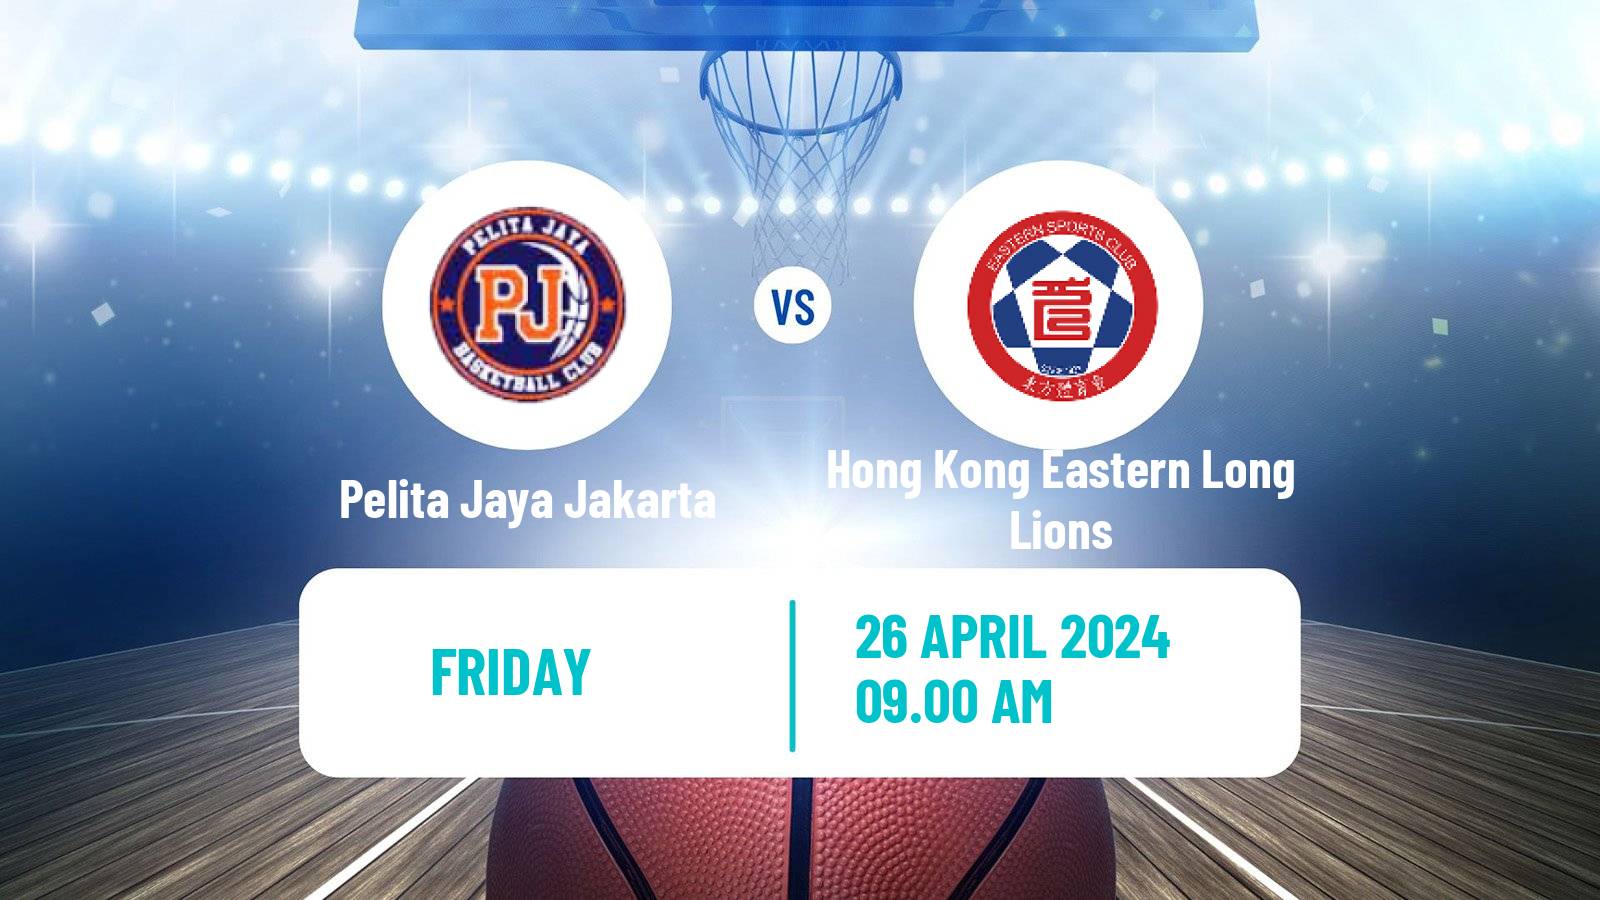 Basketball Asia Champions League Basketball Pelita Jaya Jakarta - Hong Kong Eastern Long Lions